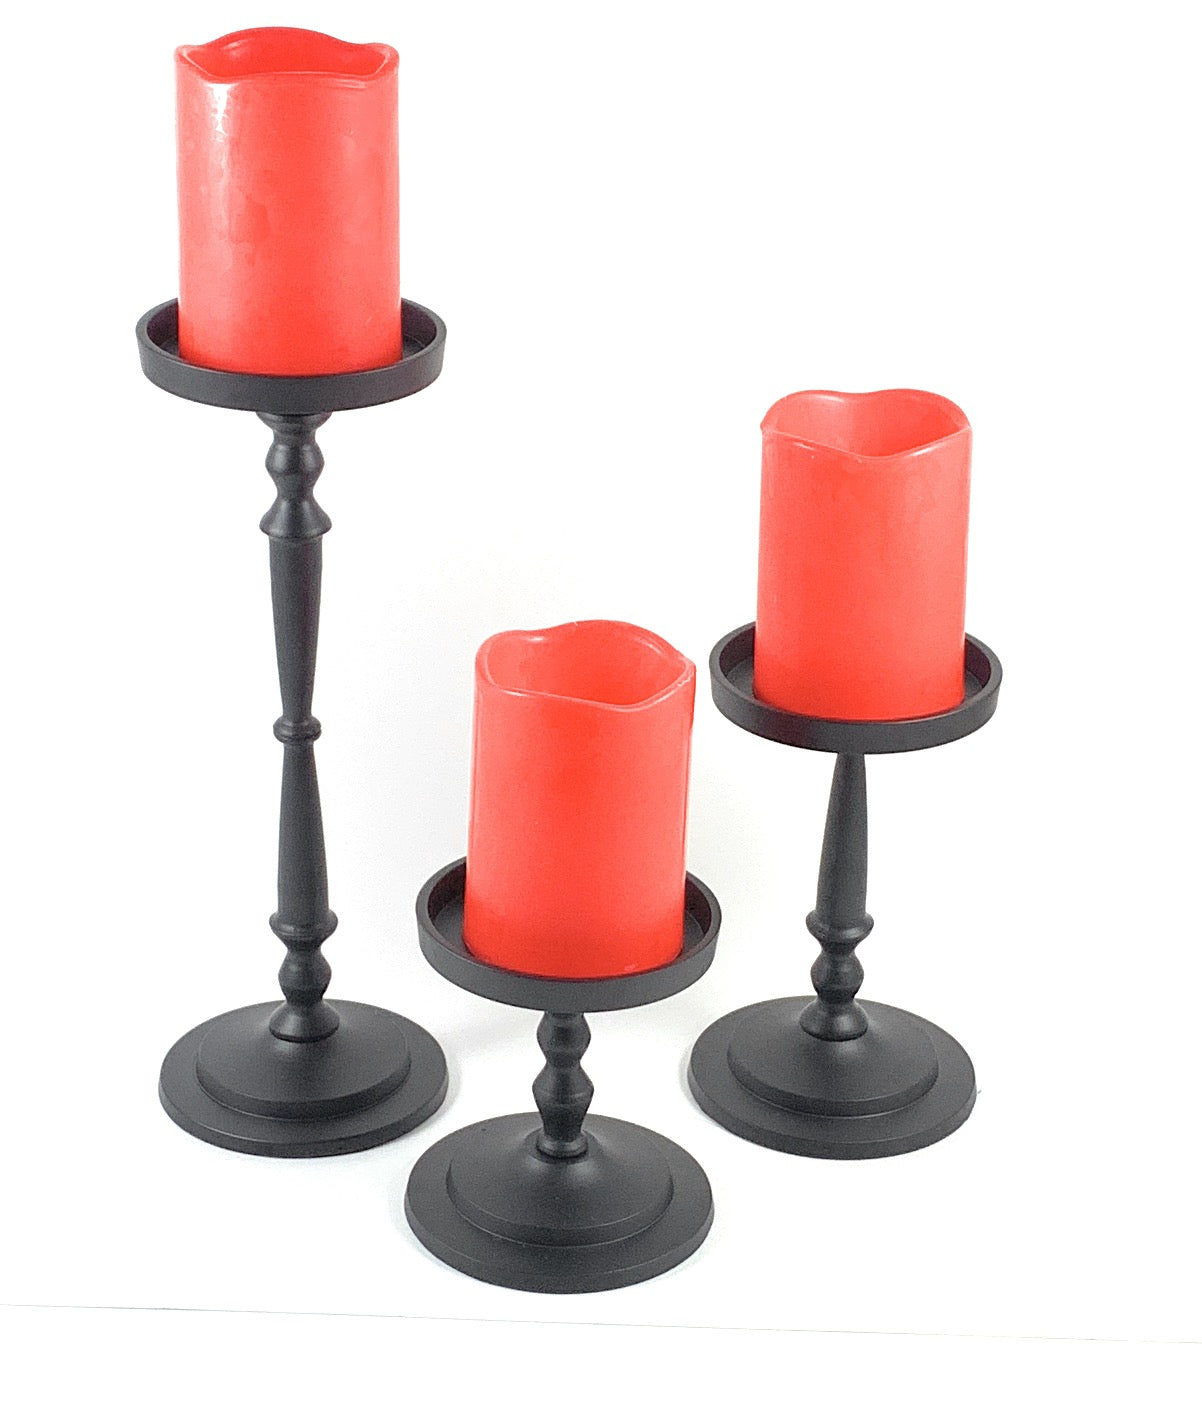 Pillar Candle Holder - Set of 3